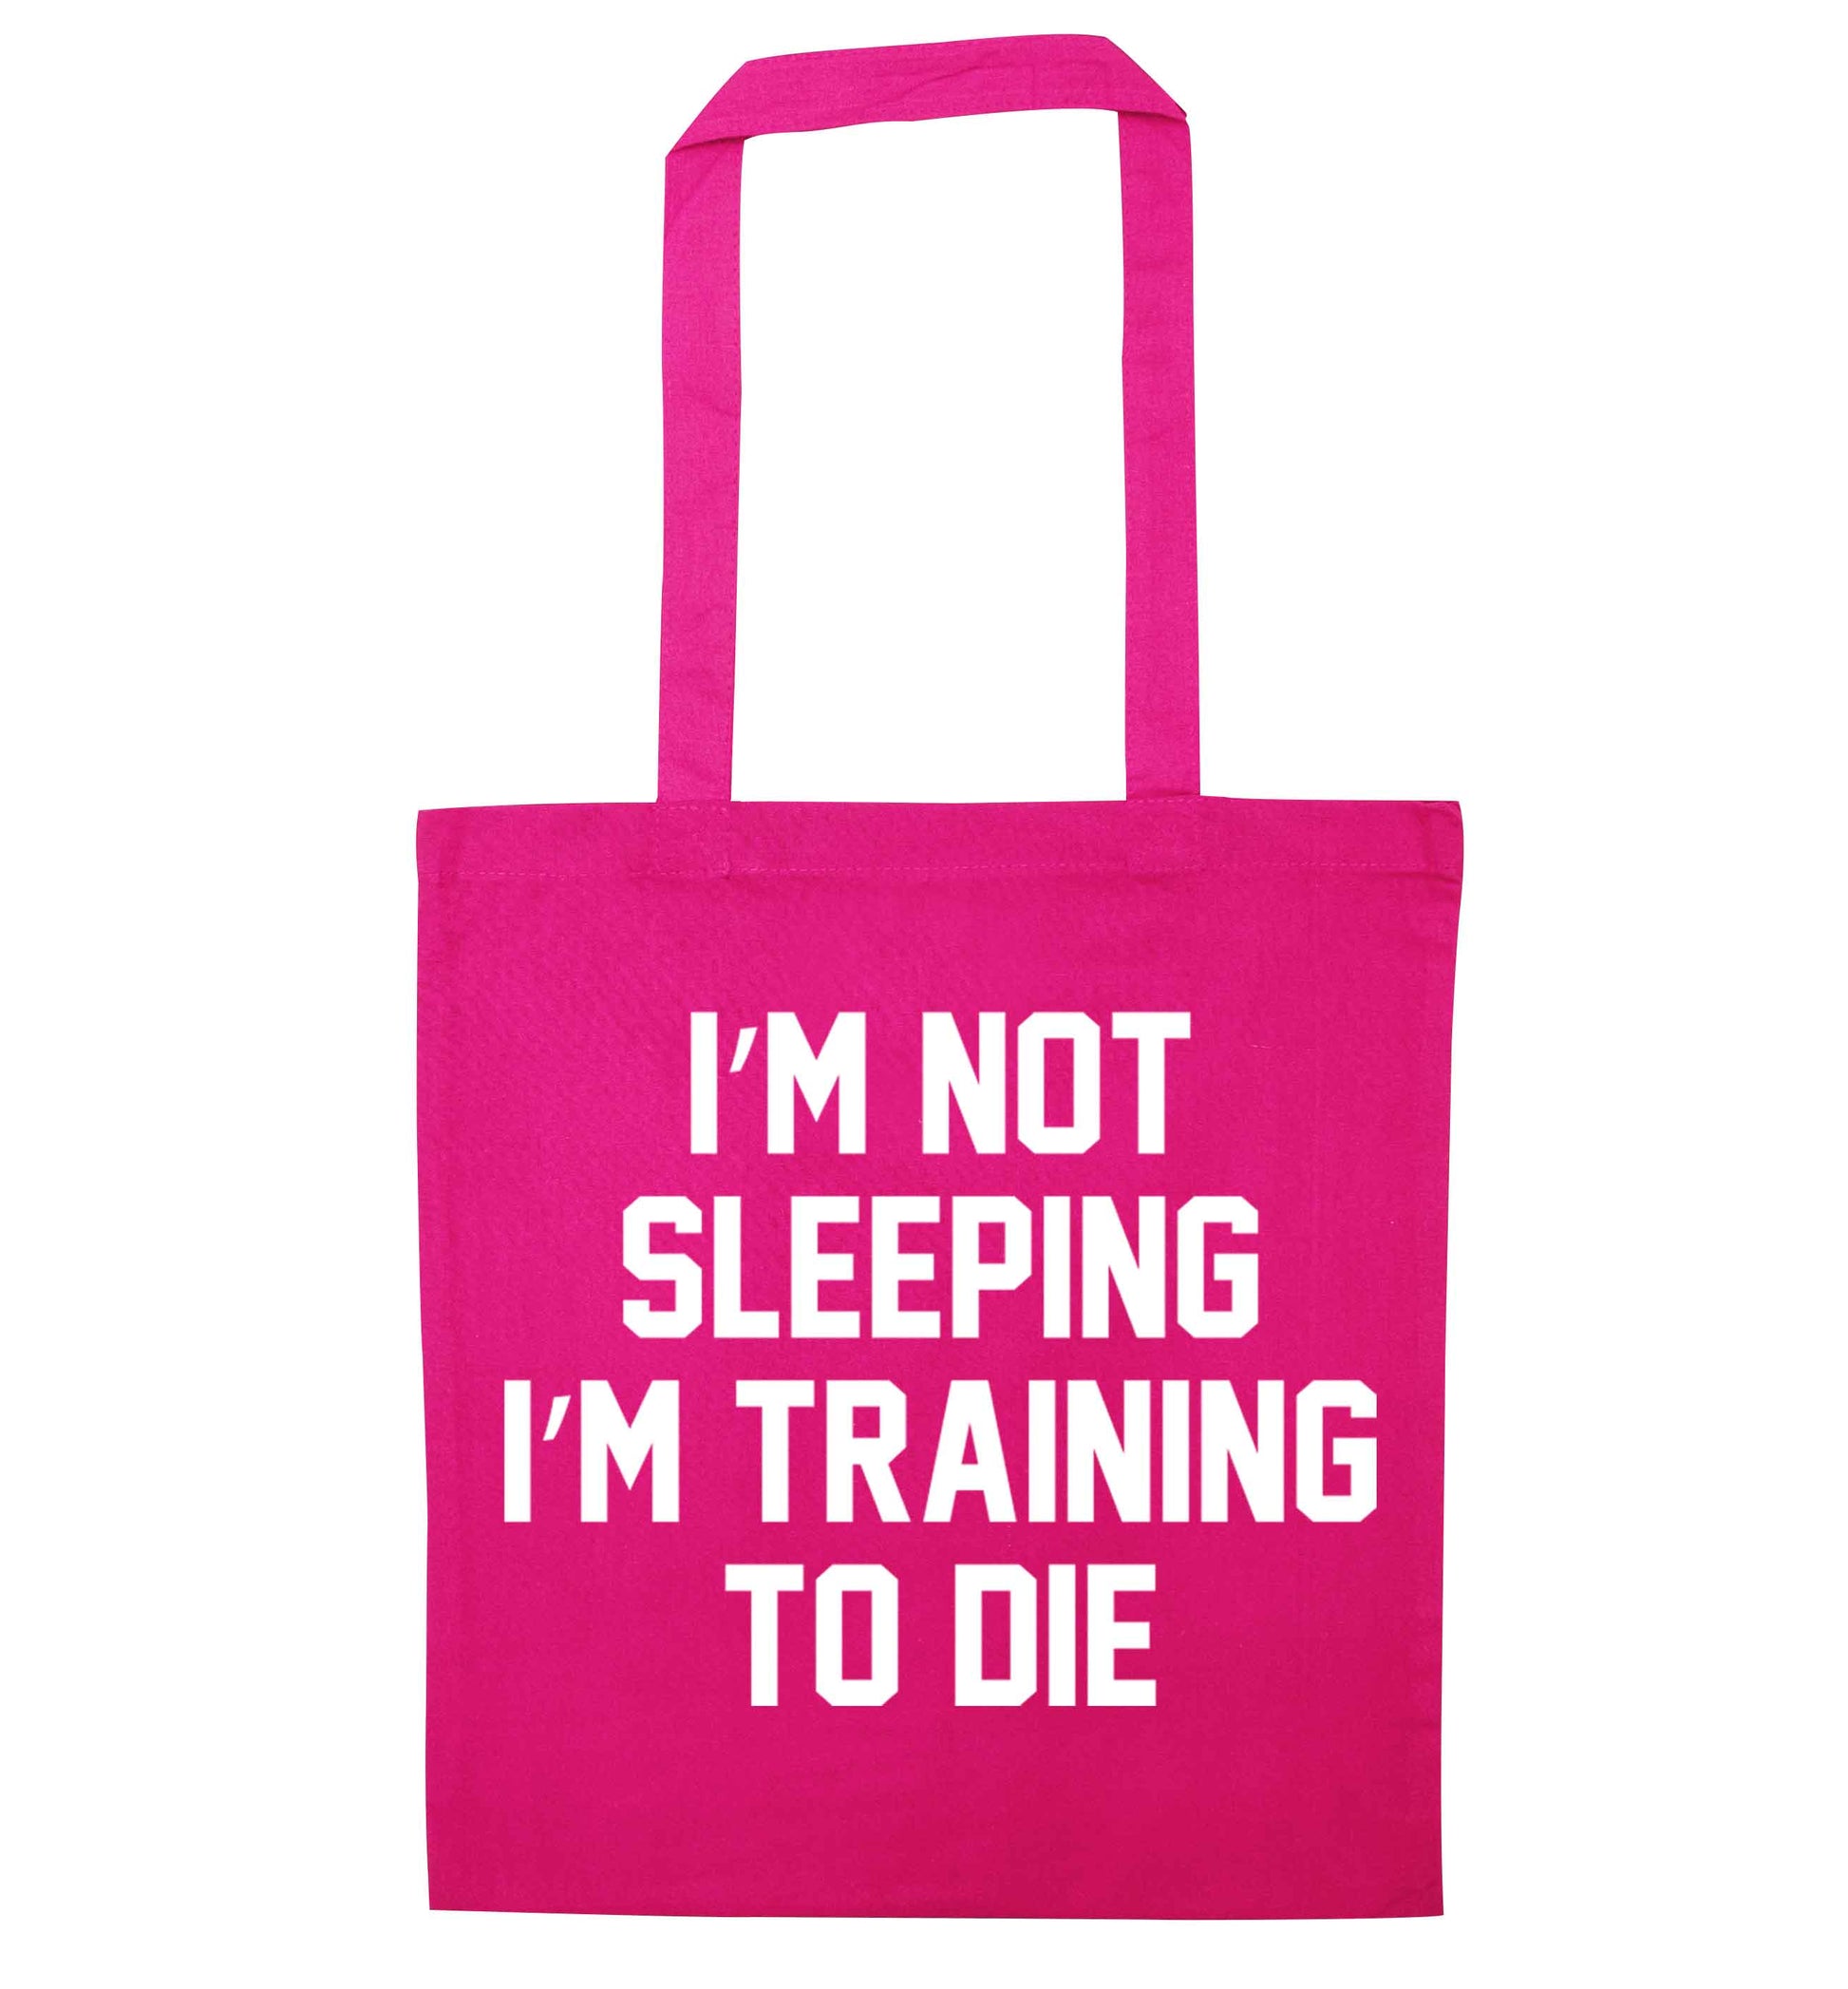 I'm not sleeping I'm training to die pink tote bag